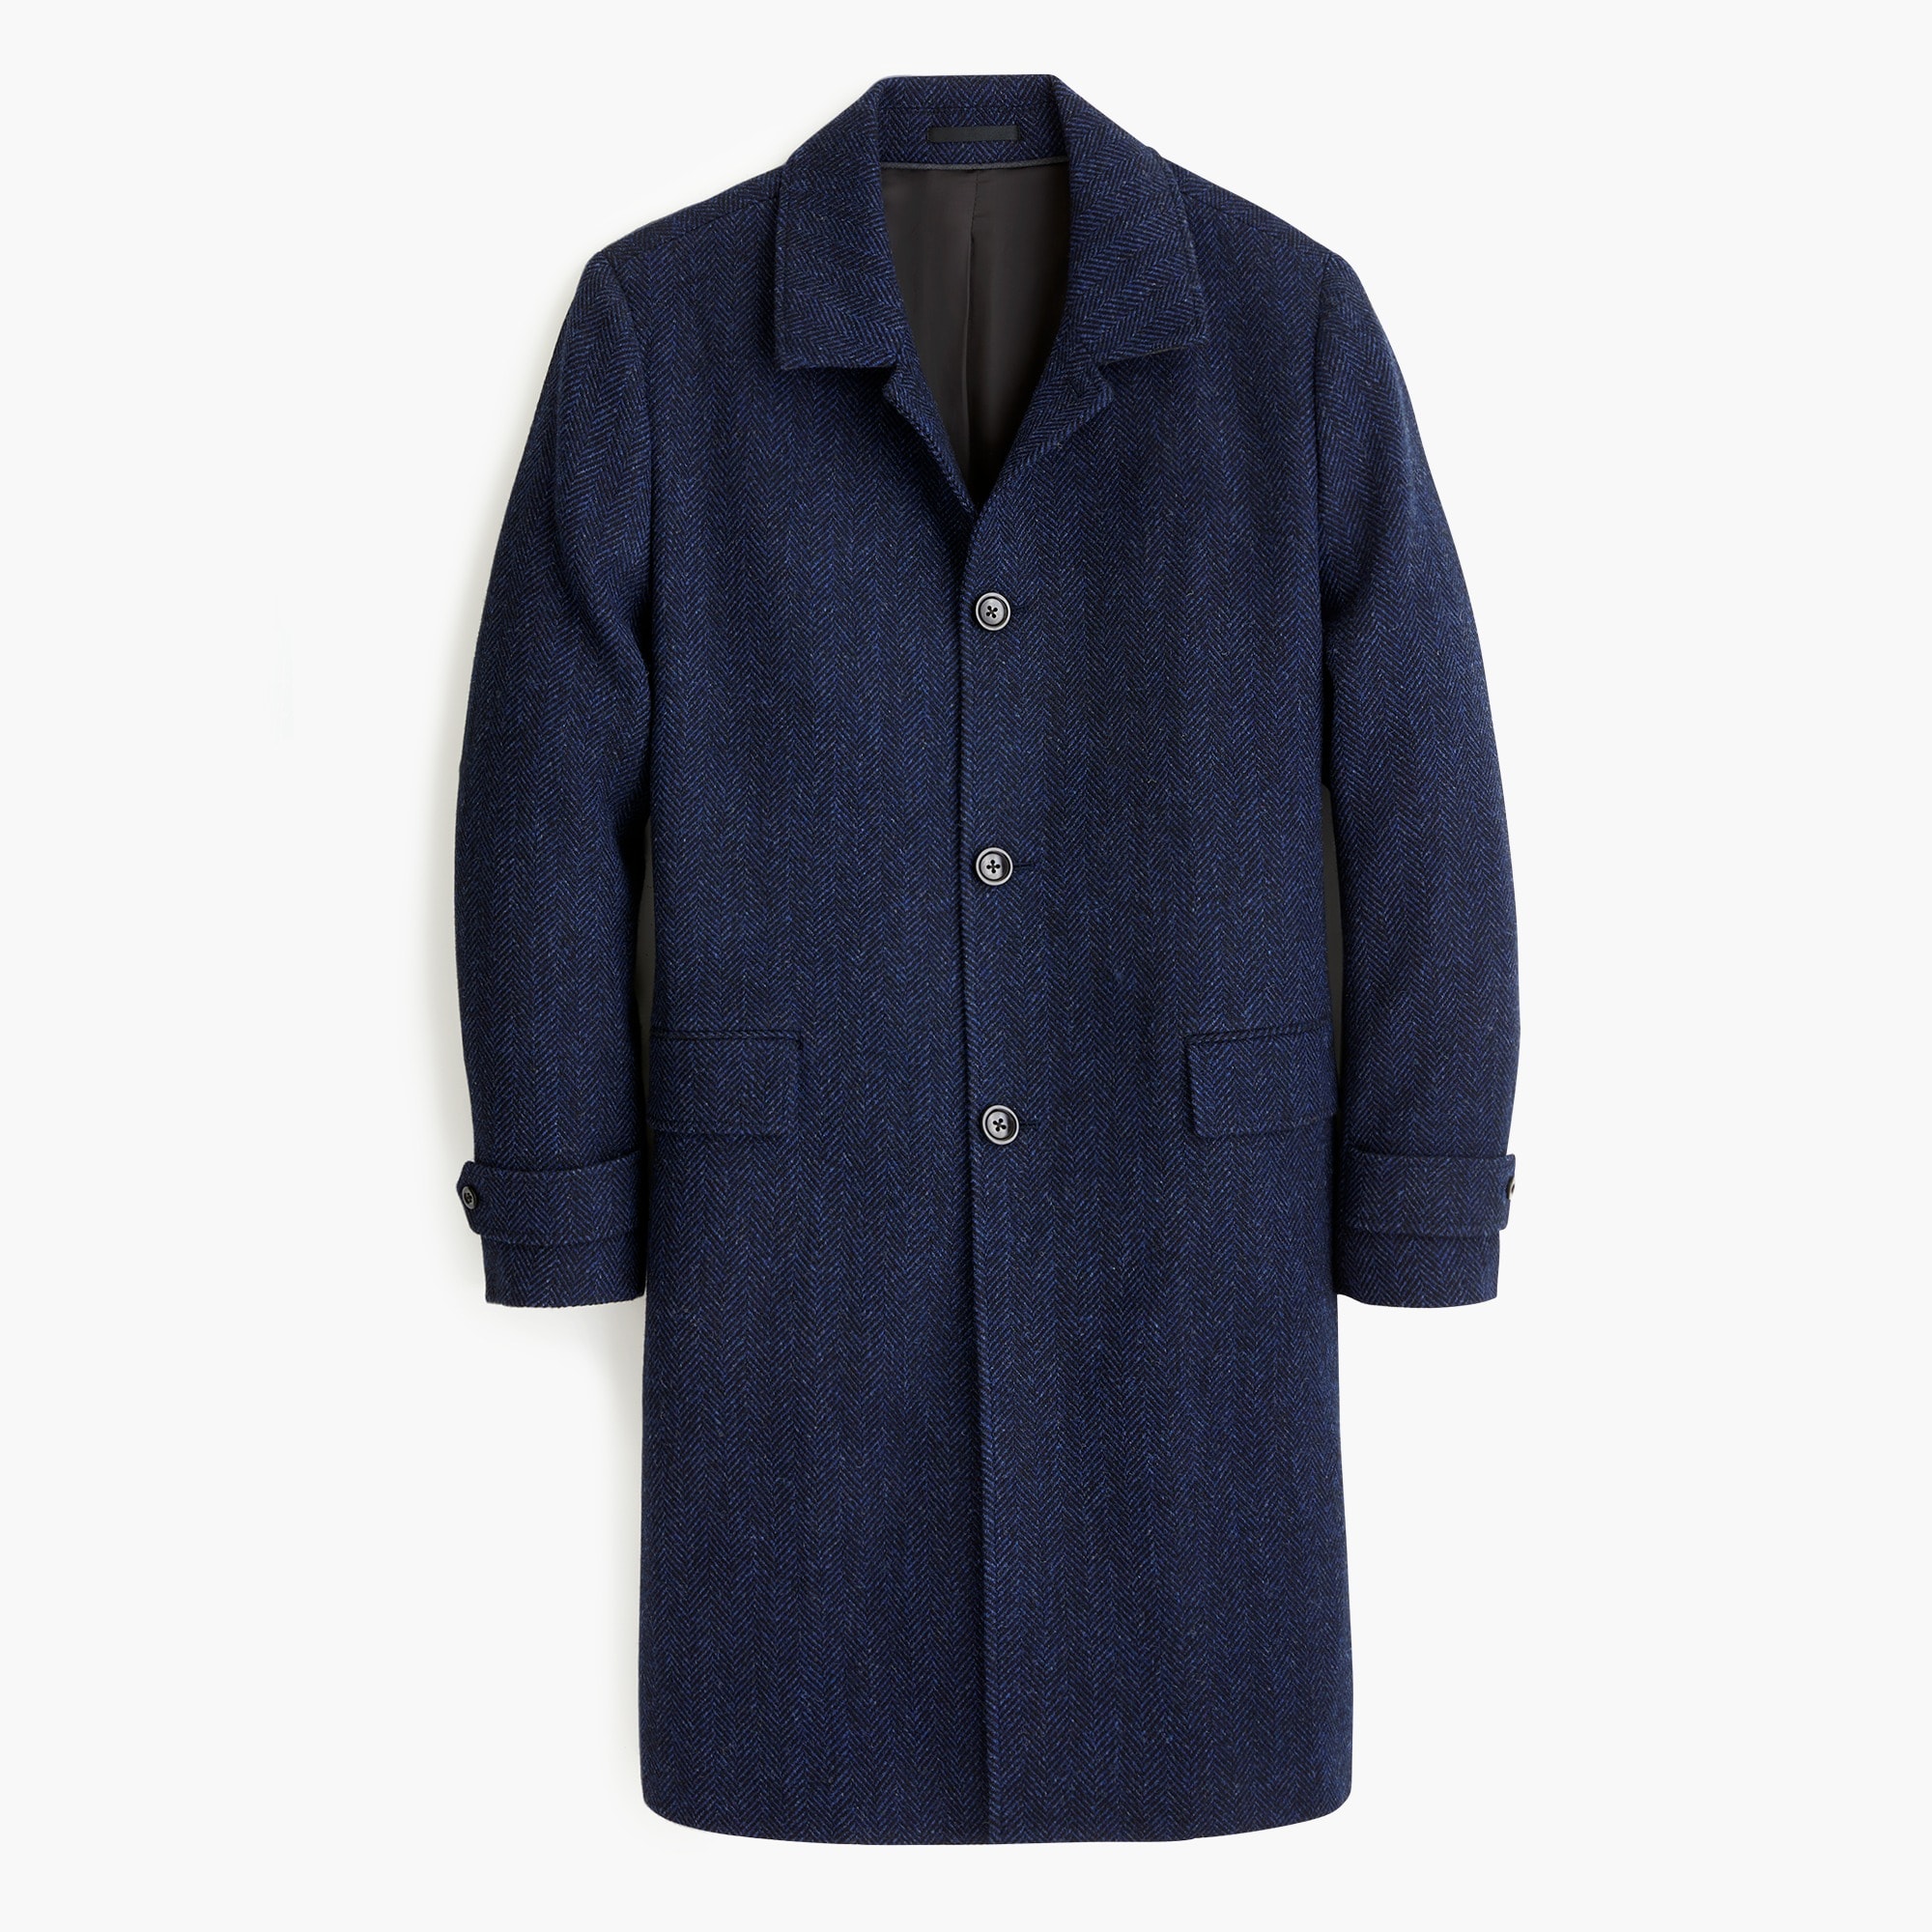 J.Crew: Oversized Topcoat In Heathered Herringbone Wool For Men